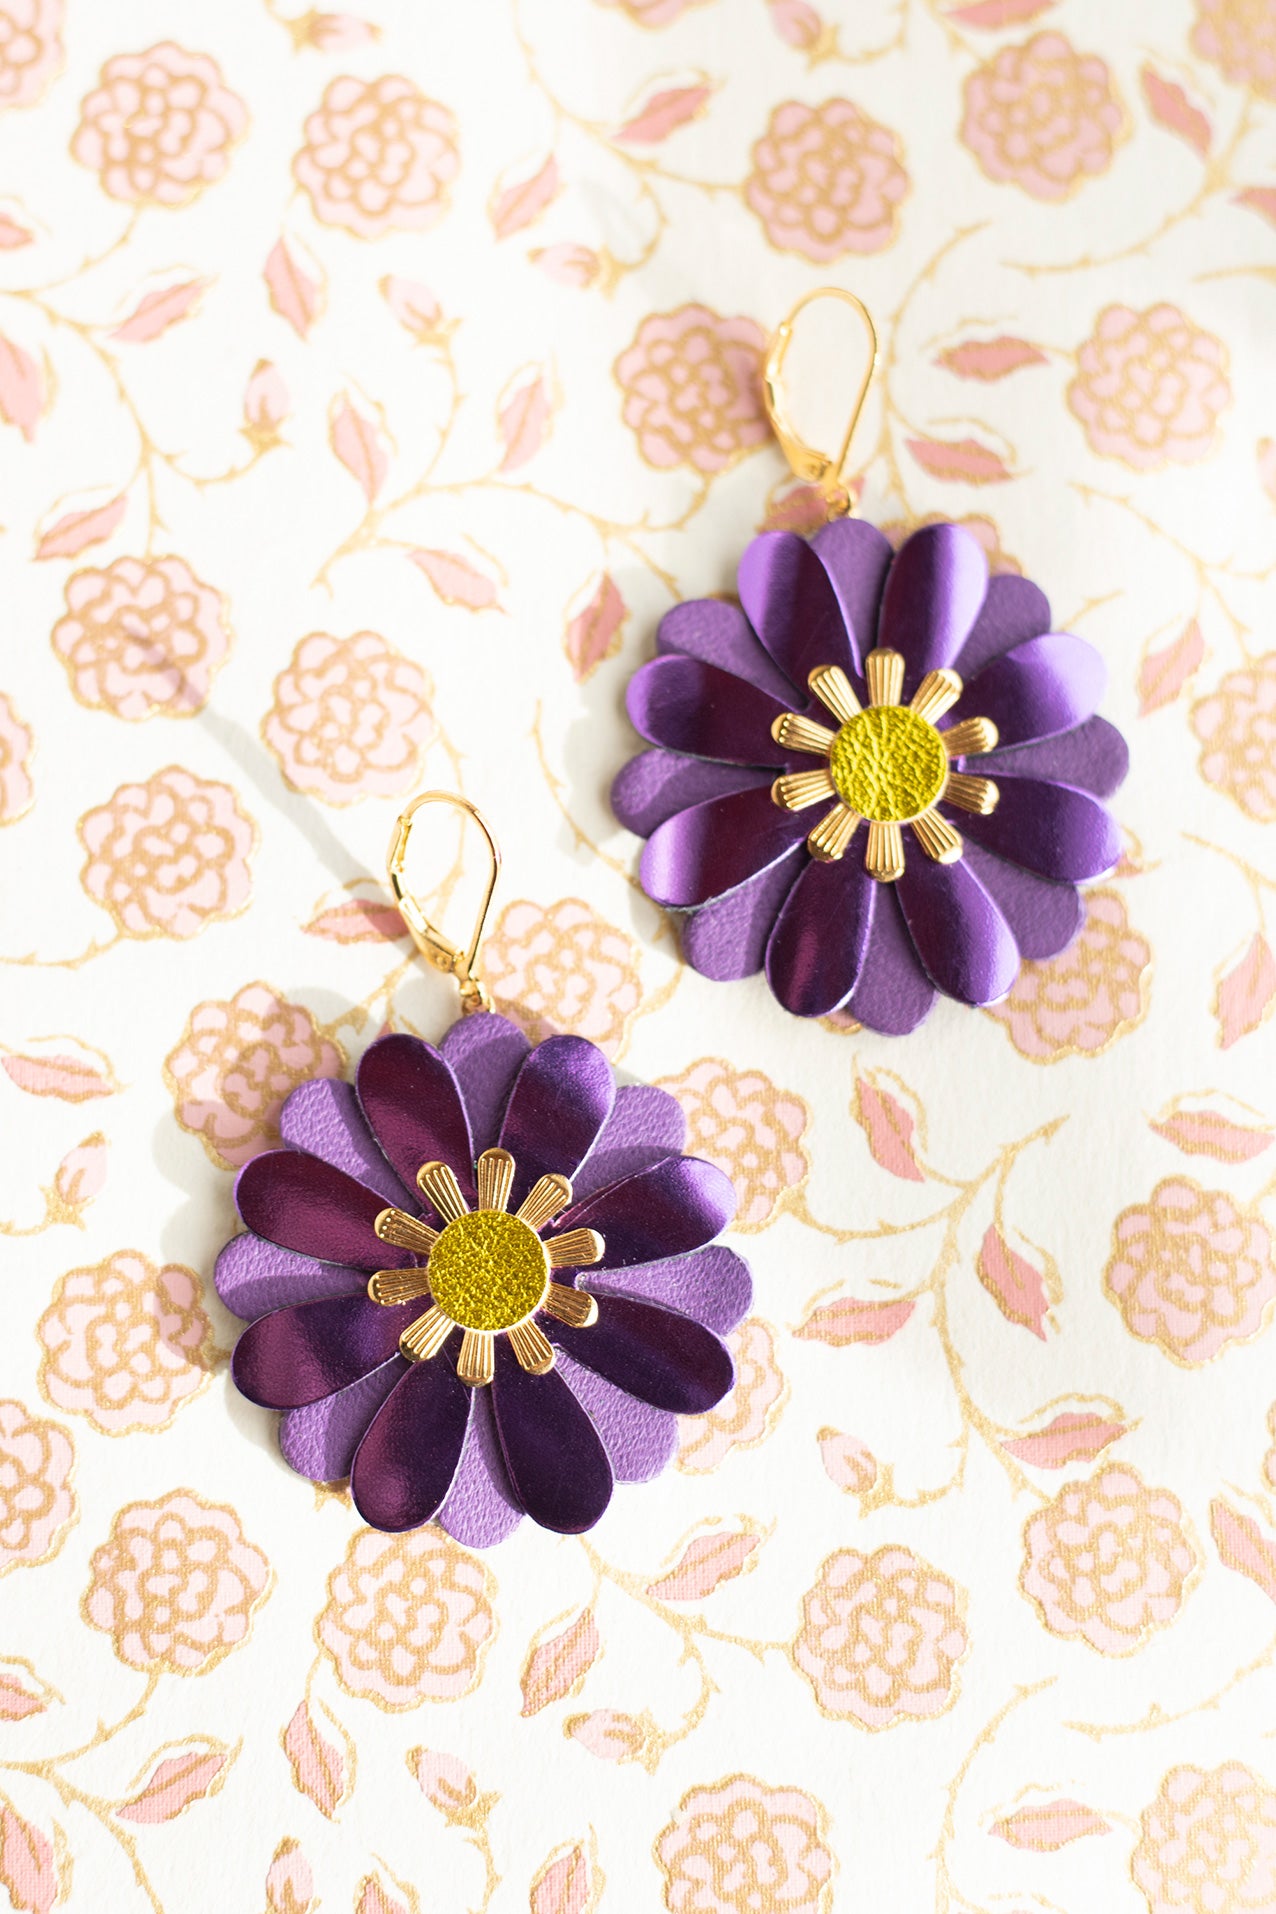 Zinnia flower earrings - metallic purple and dark purple leather